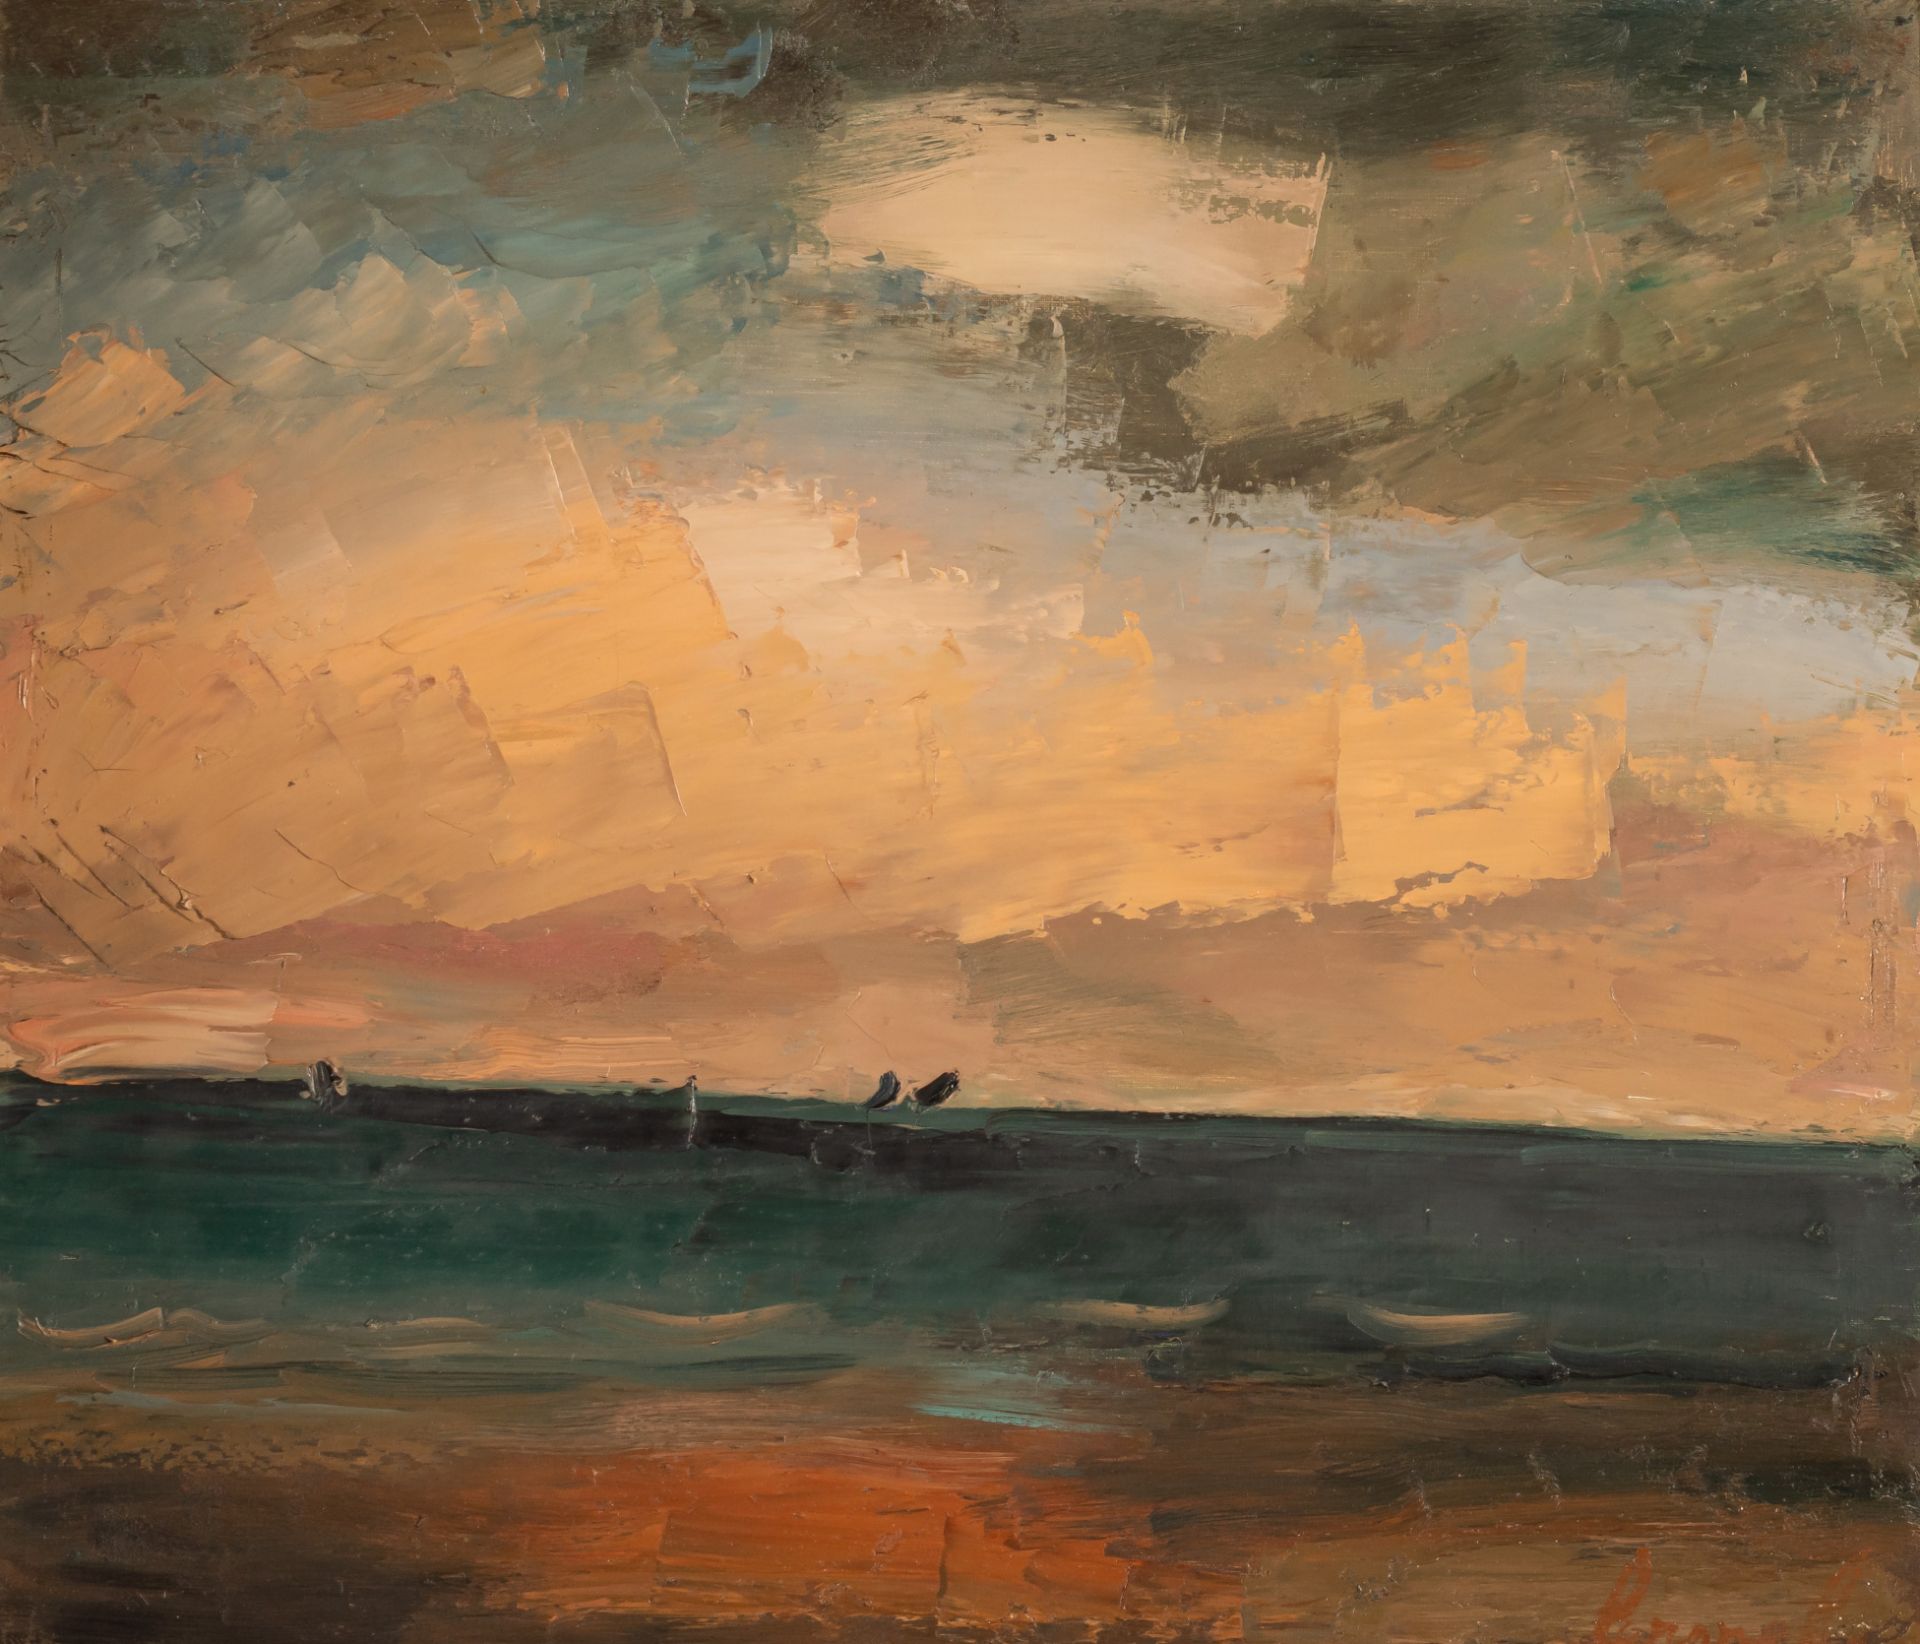 Constant Permeke (1886-1952), marine, oil on canvas, 65 x 74 cm